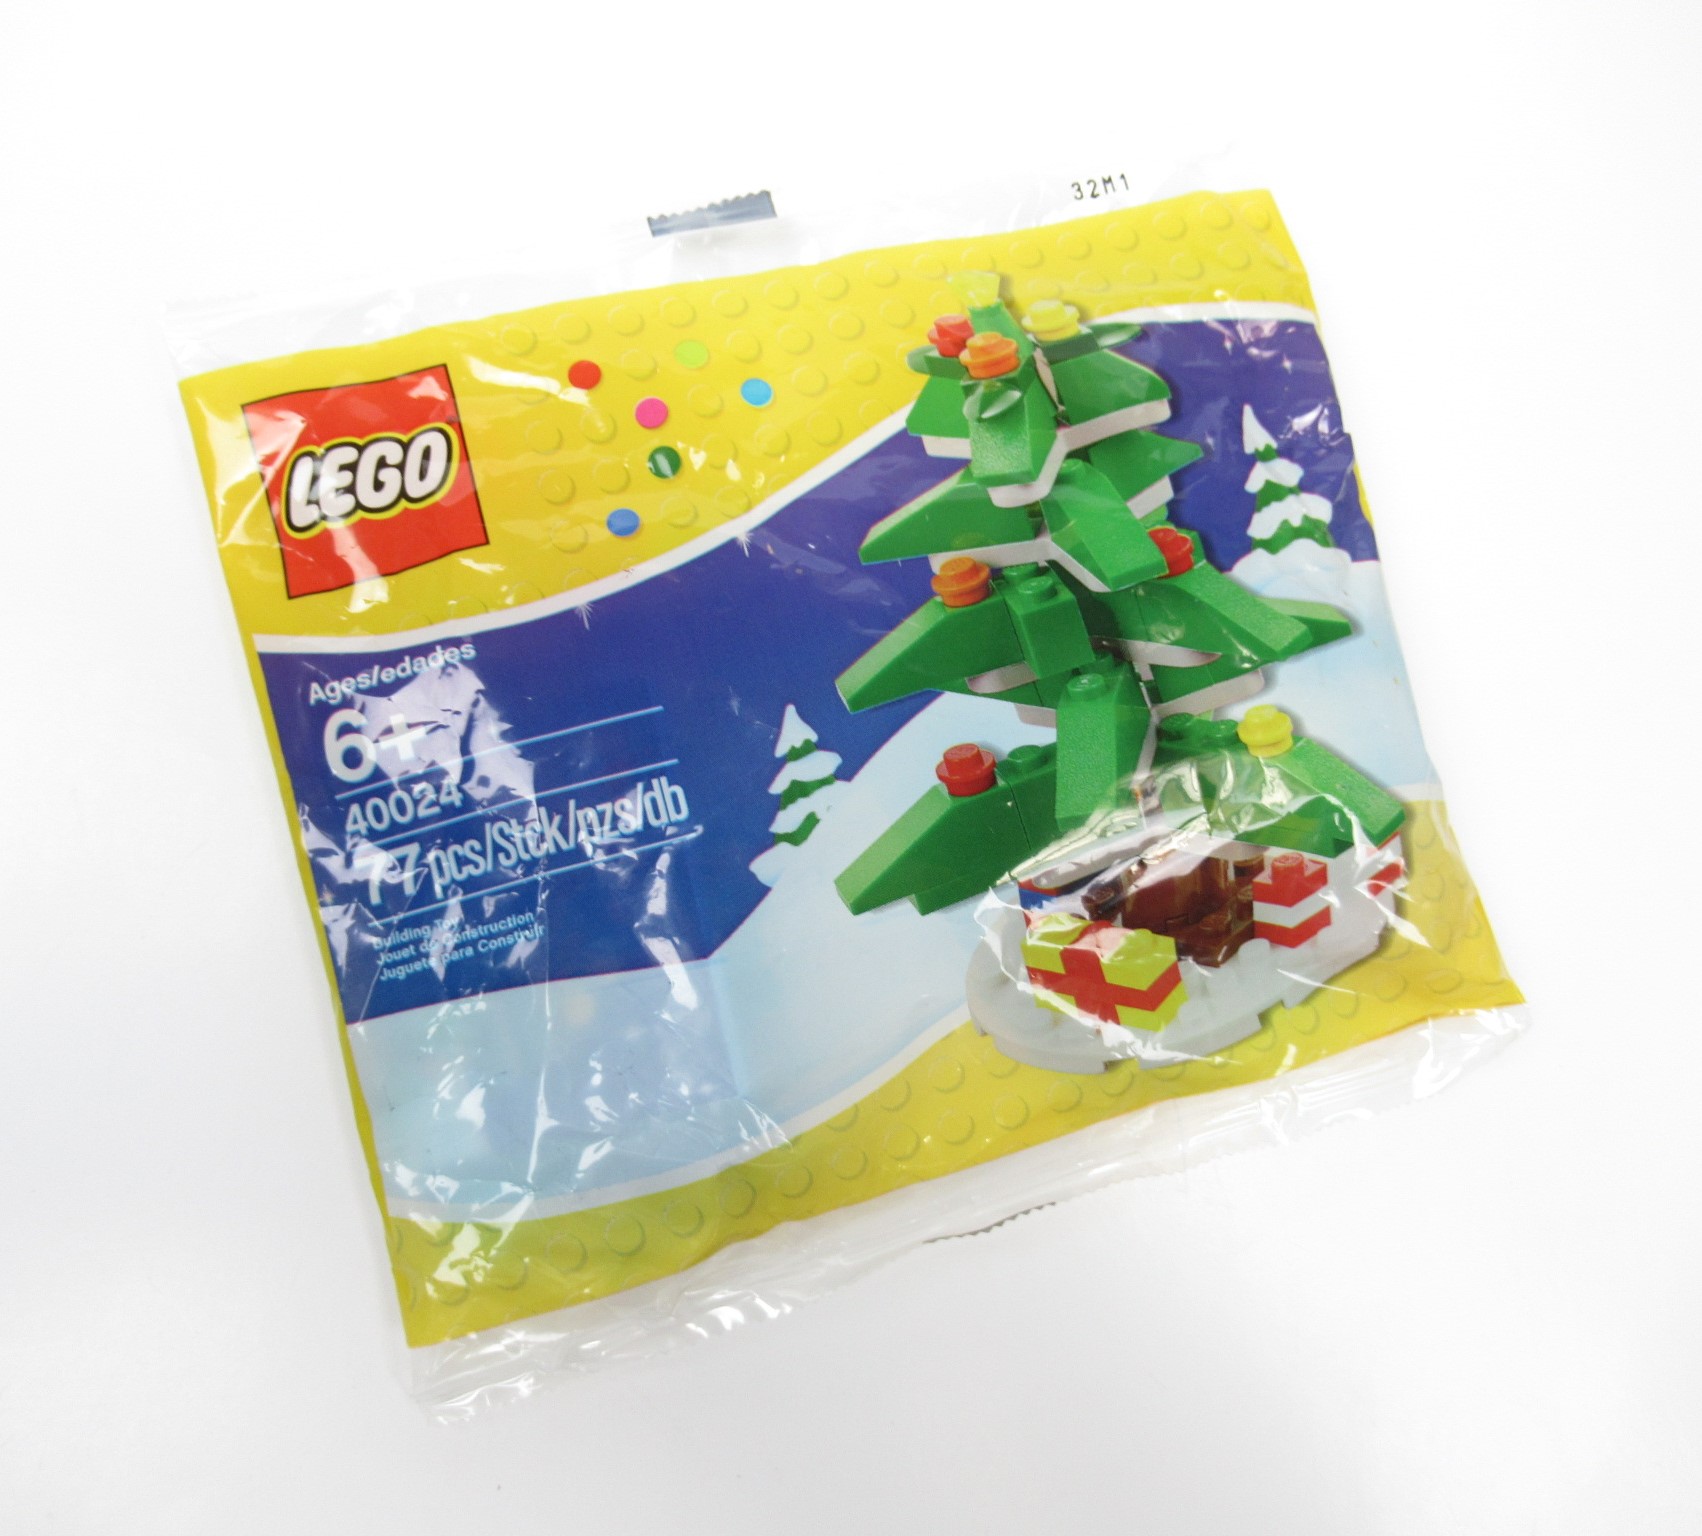 Obrázek LEGO Creator - 40024 Weihnachtsbaum Polybag